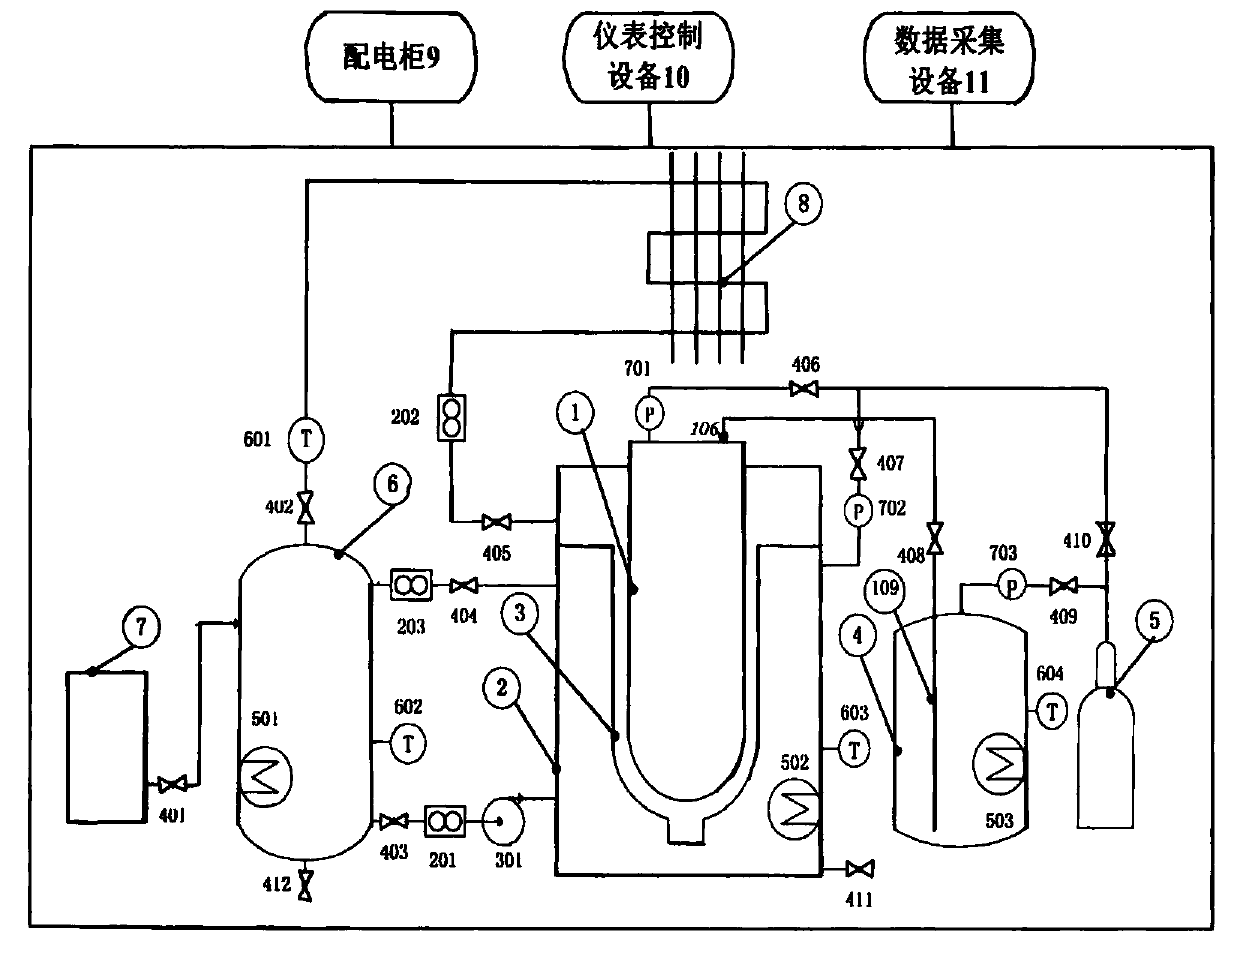 External cooling test system and method for pressure vessel